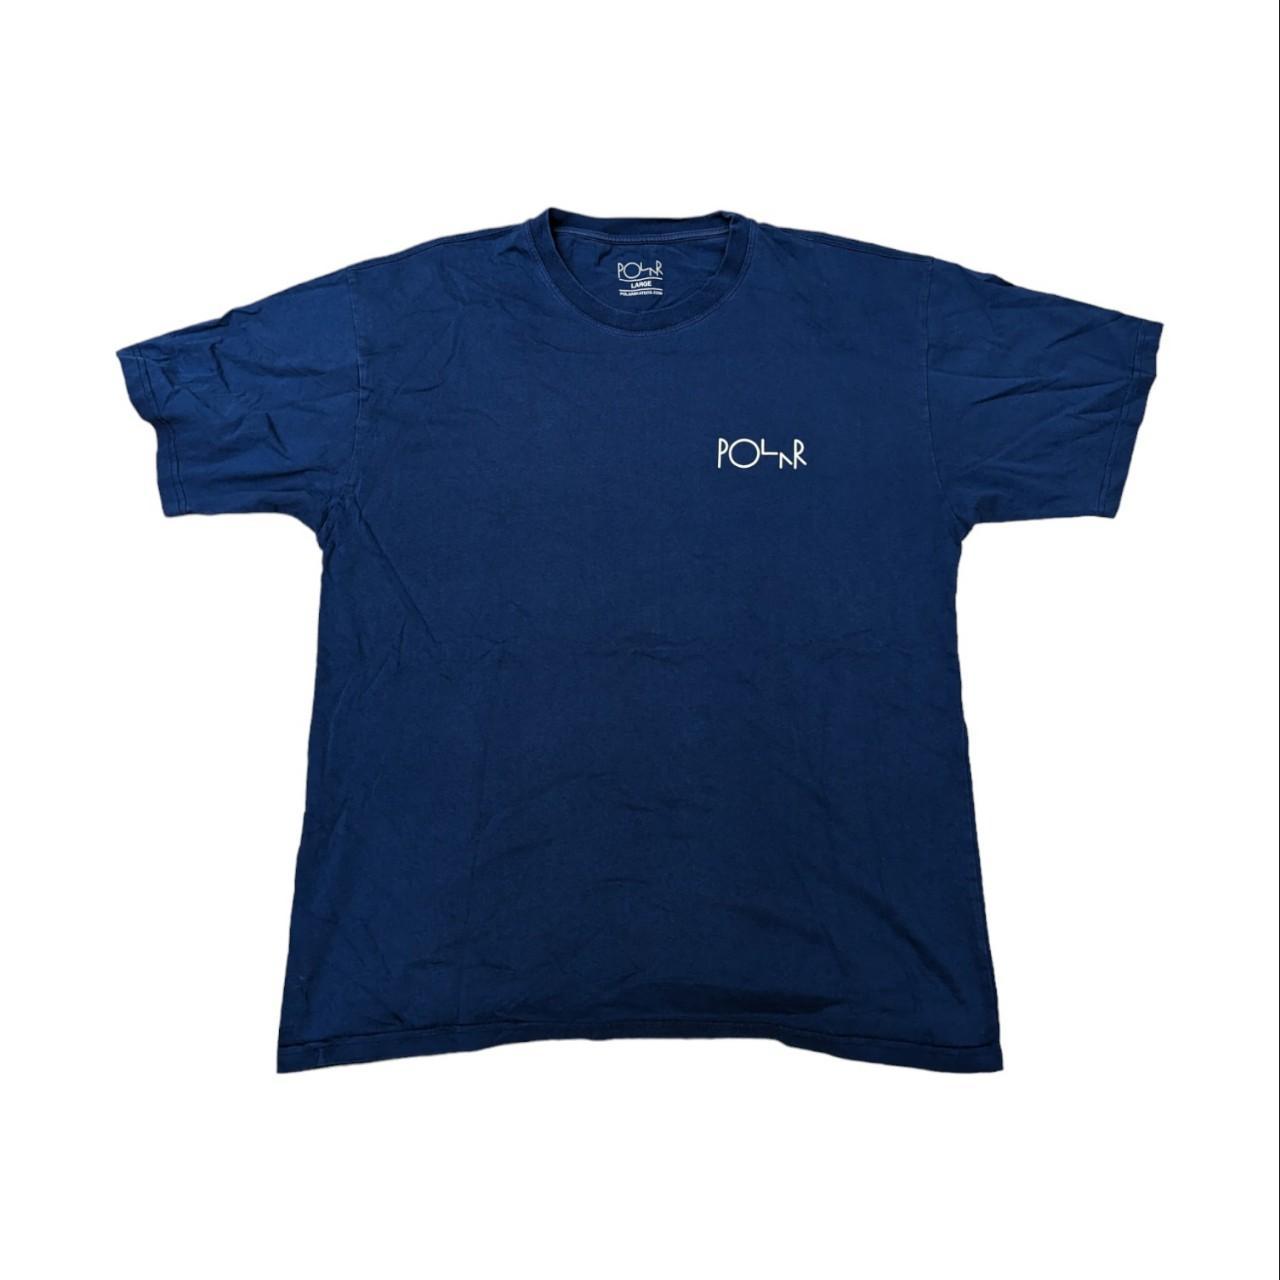 Polar Royal Blue Logo T-shirt Size Large No Flaws - Depop